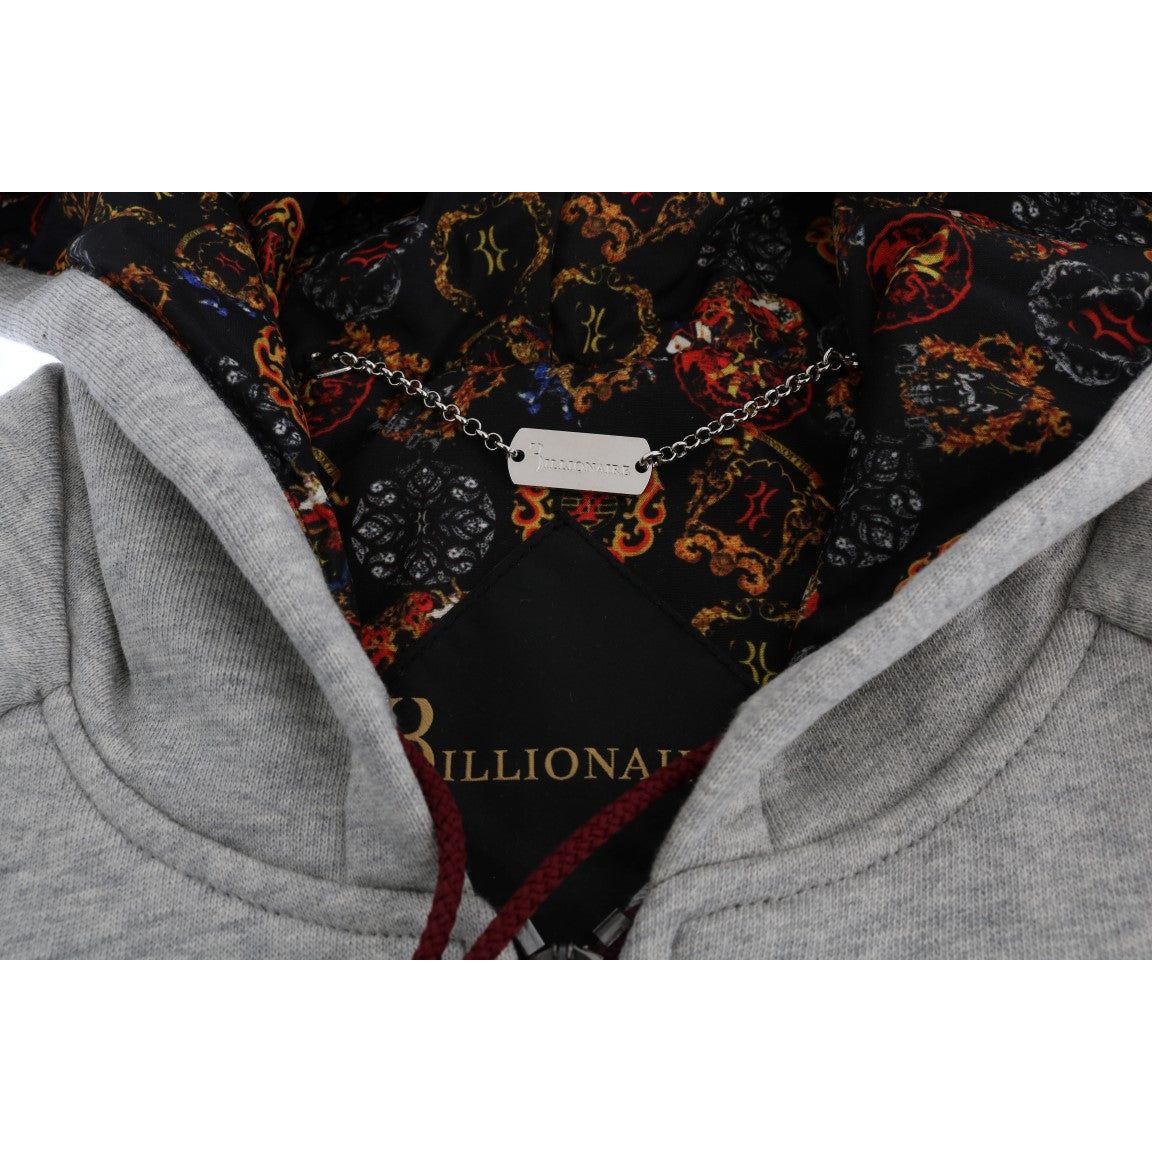 Billionaire Italian Couture Elegant Gray Cotton Sweatsuit Ensemble gray-cotton-hooded-sweatsuit-1